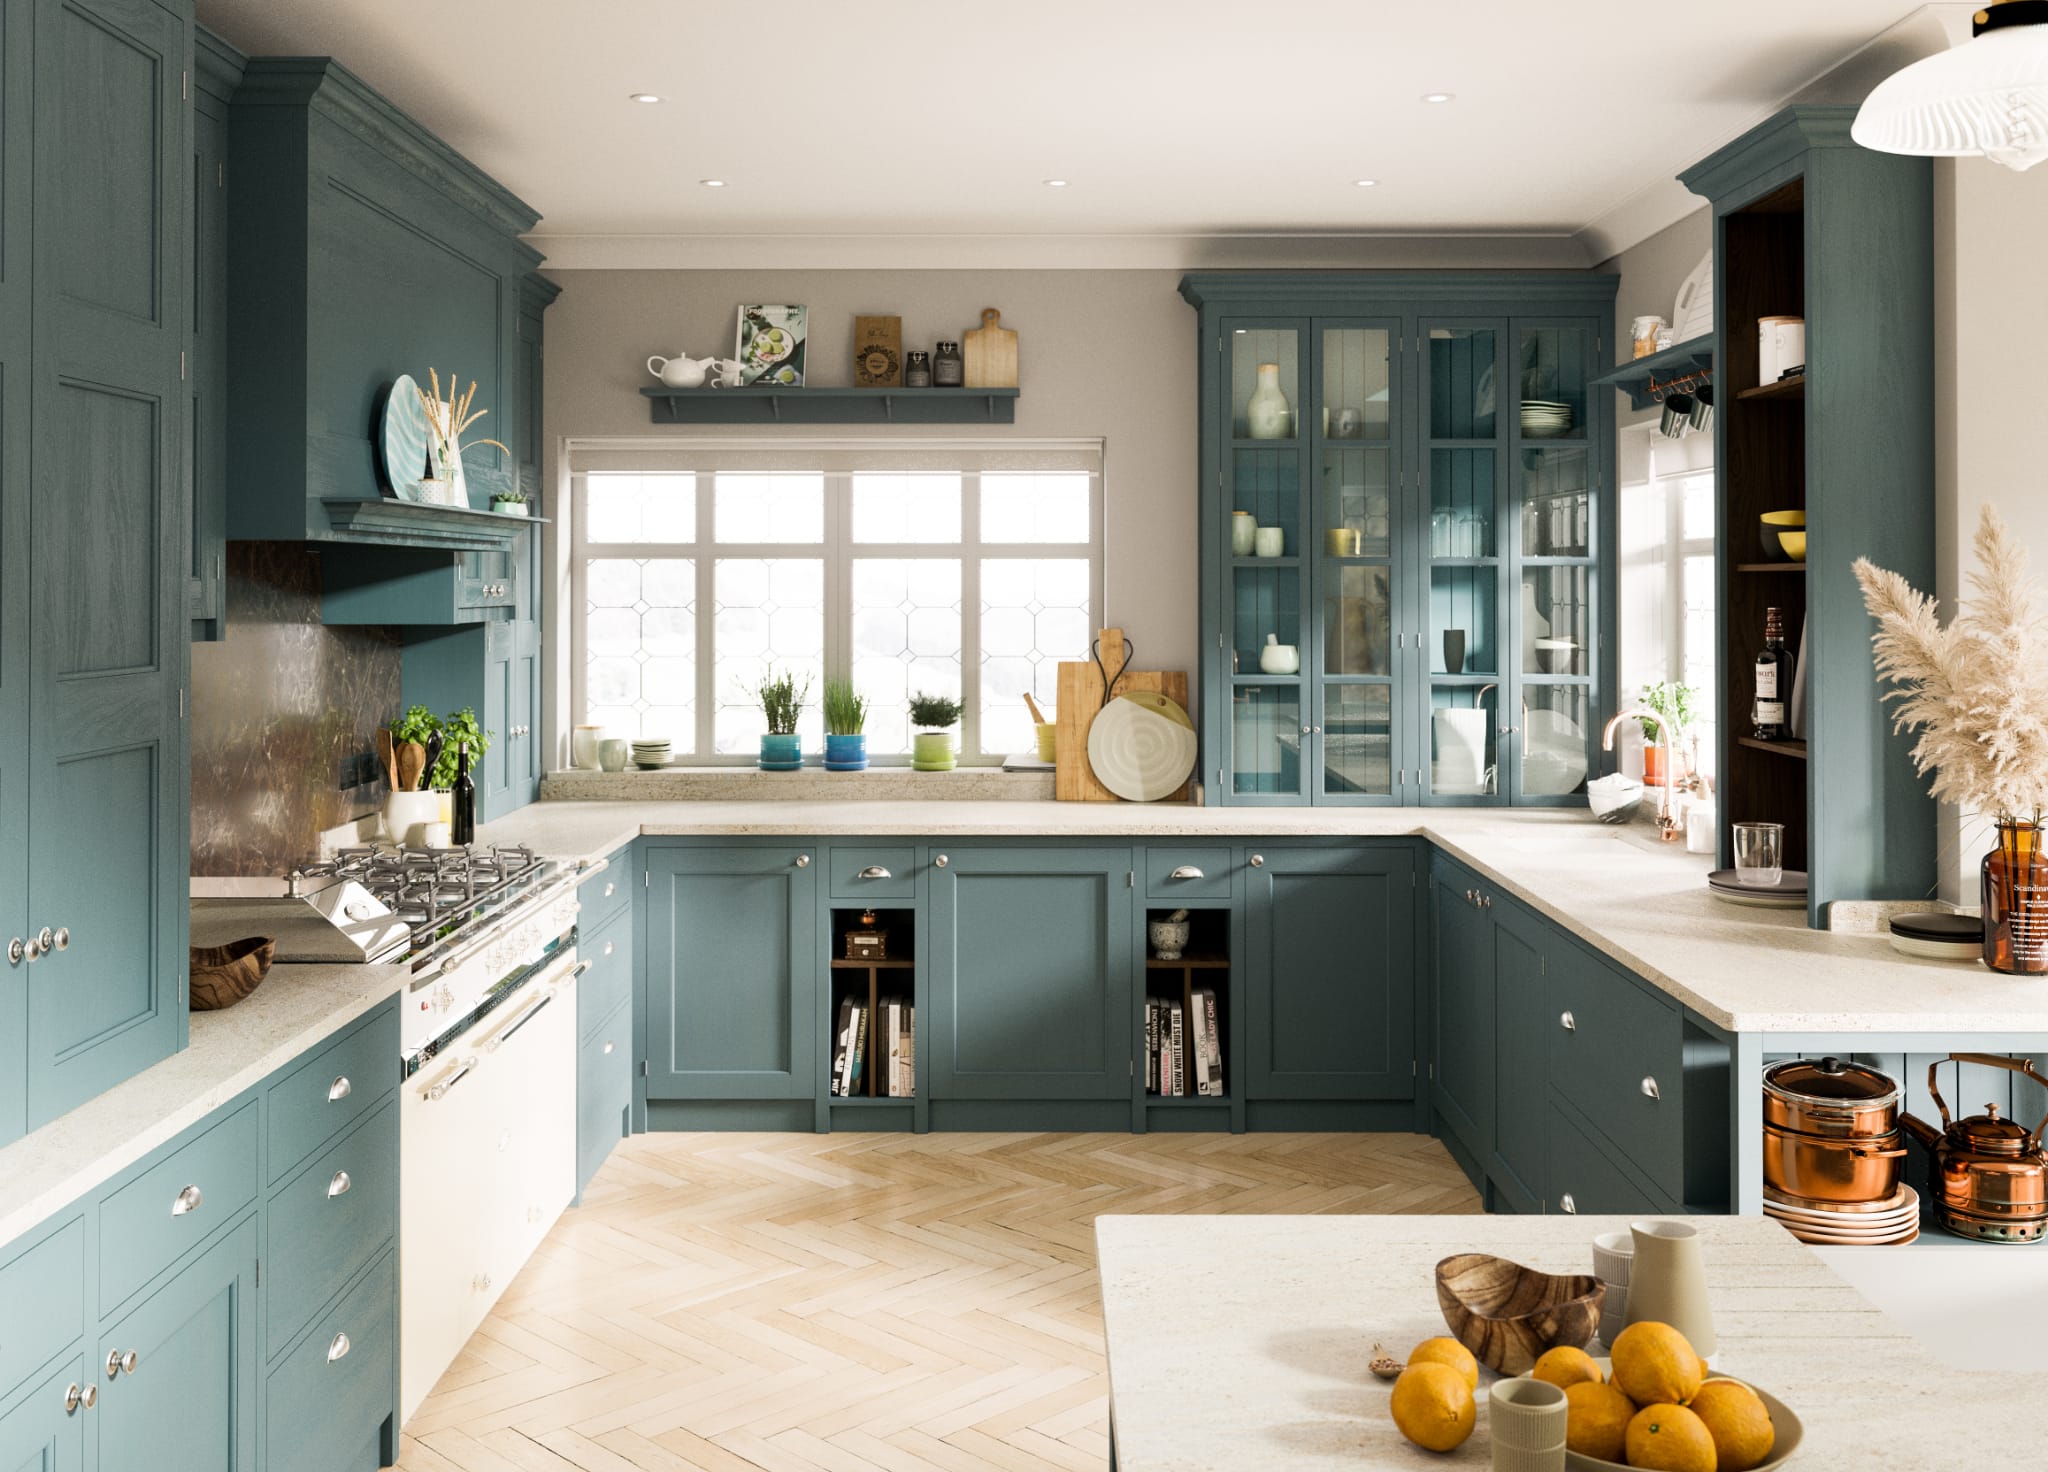 3D Render showing a blue kitchen